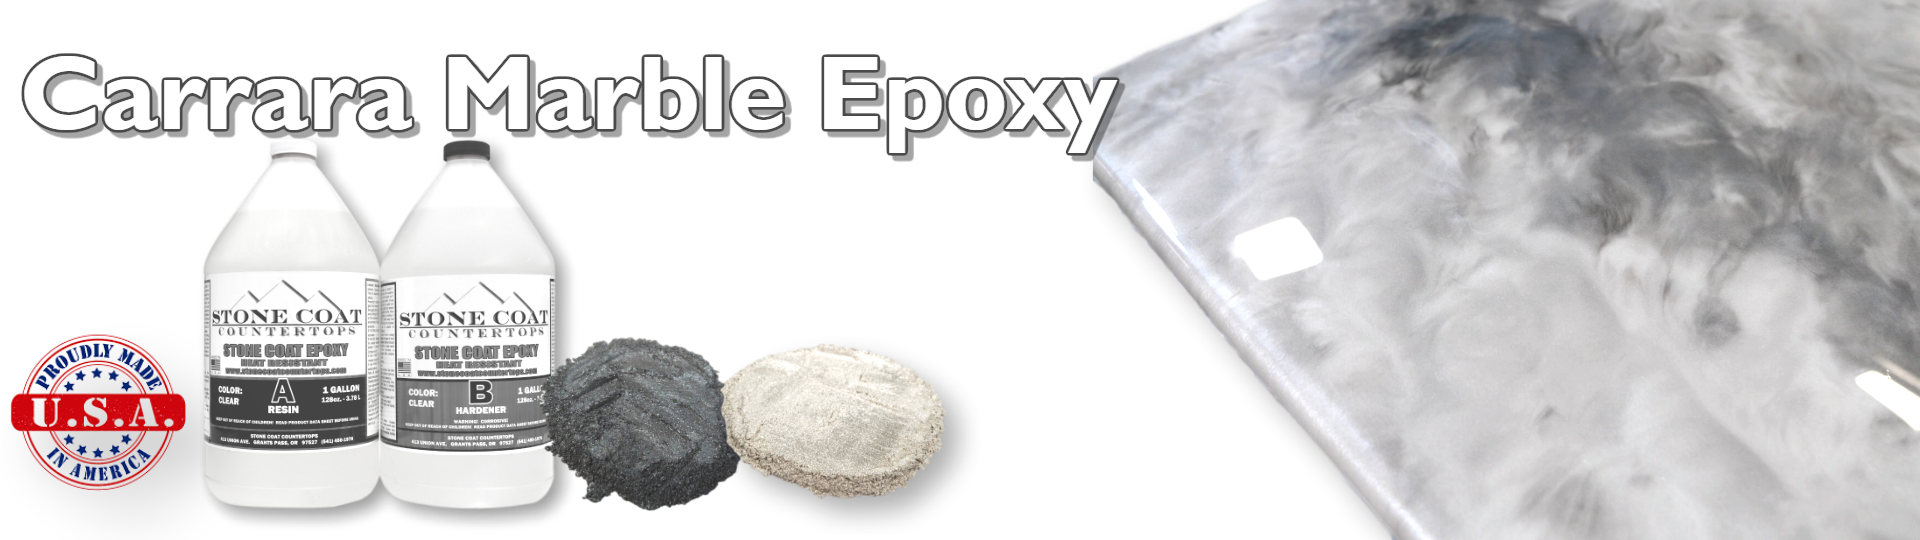 Epoxy Gallon Kits Size 1/2 Gallon | Stone Coat Countertops